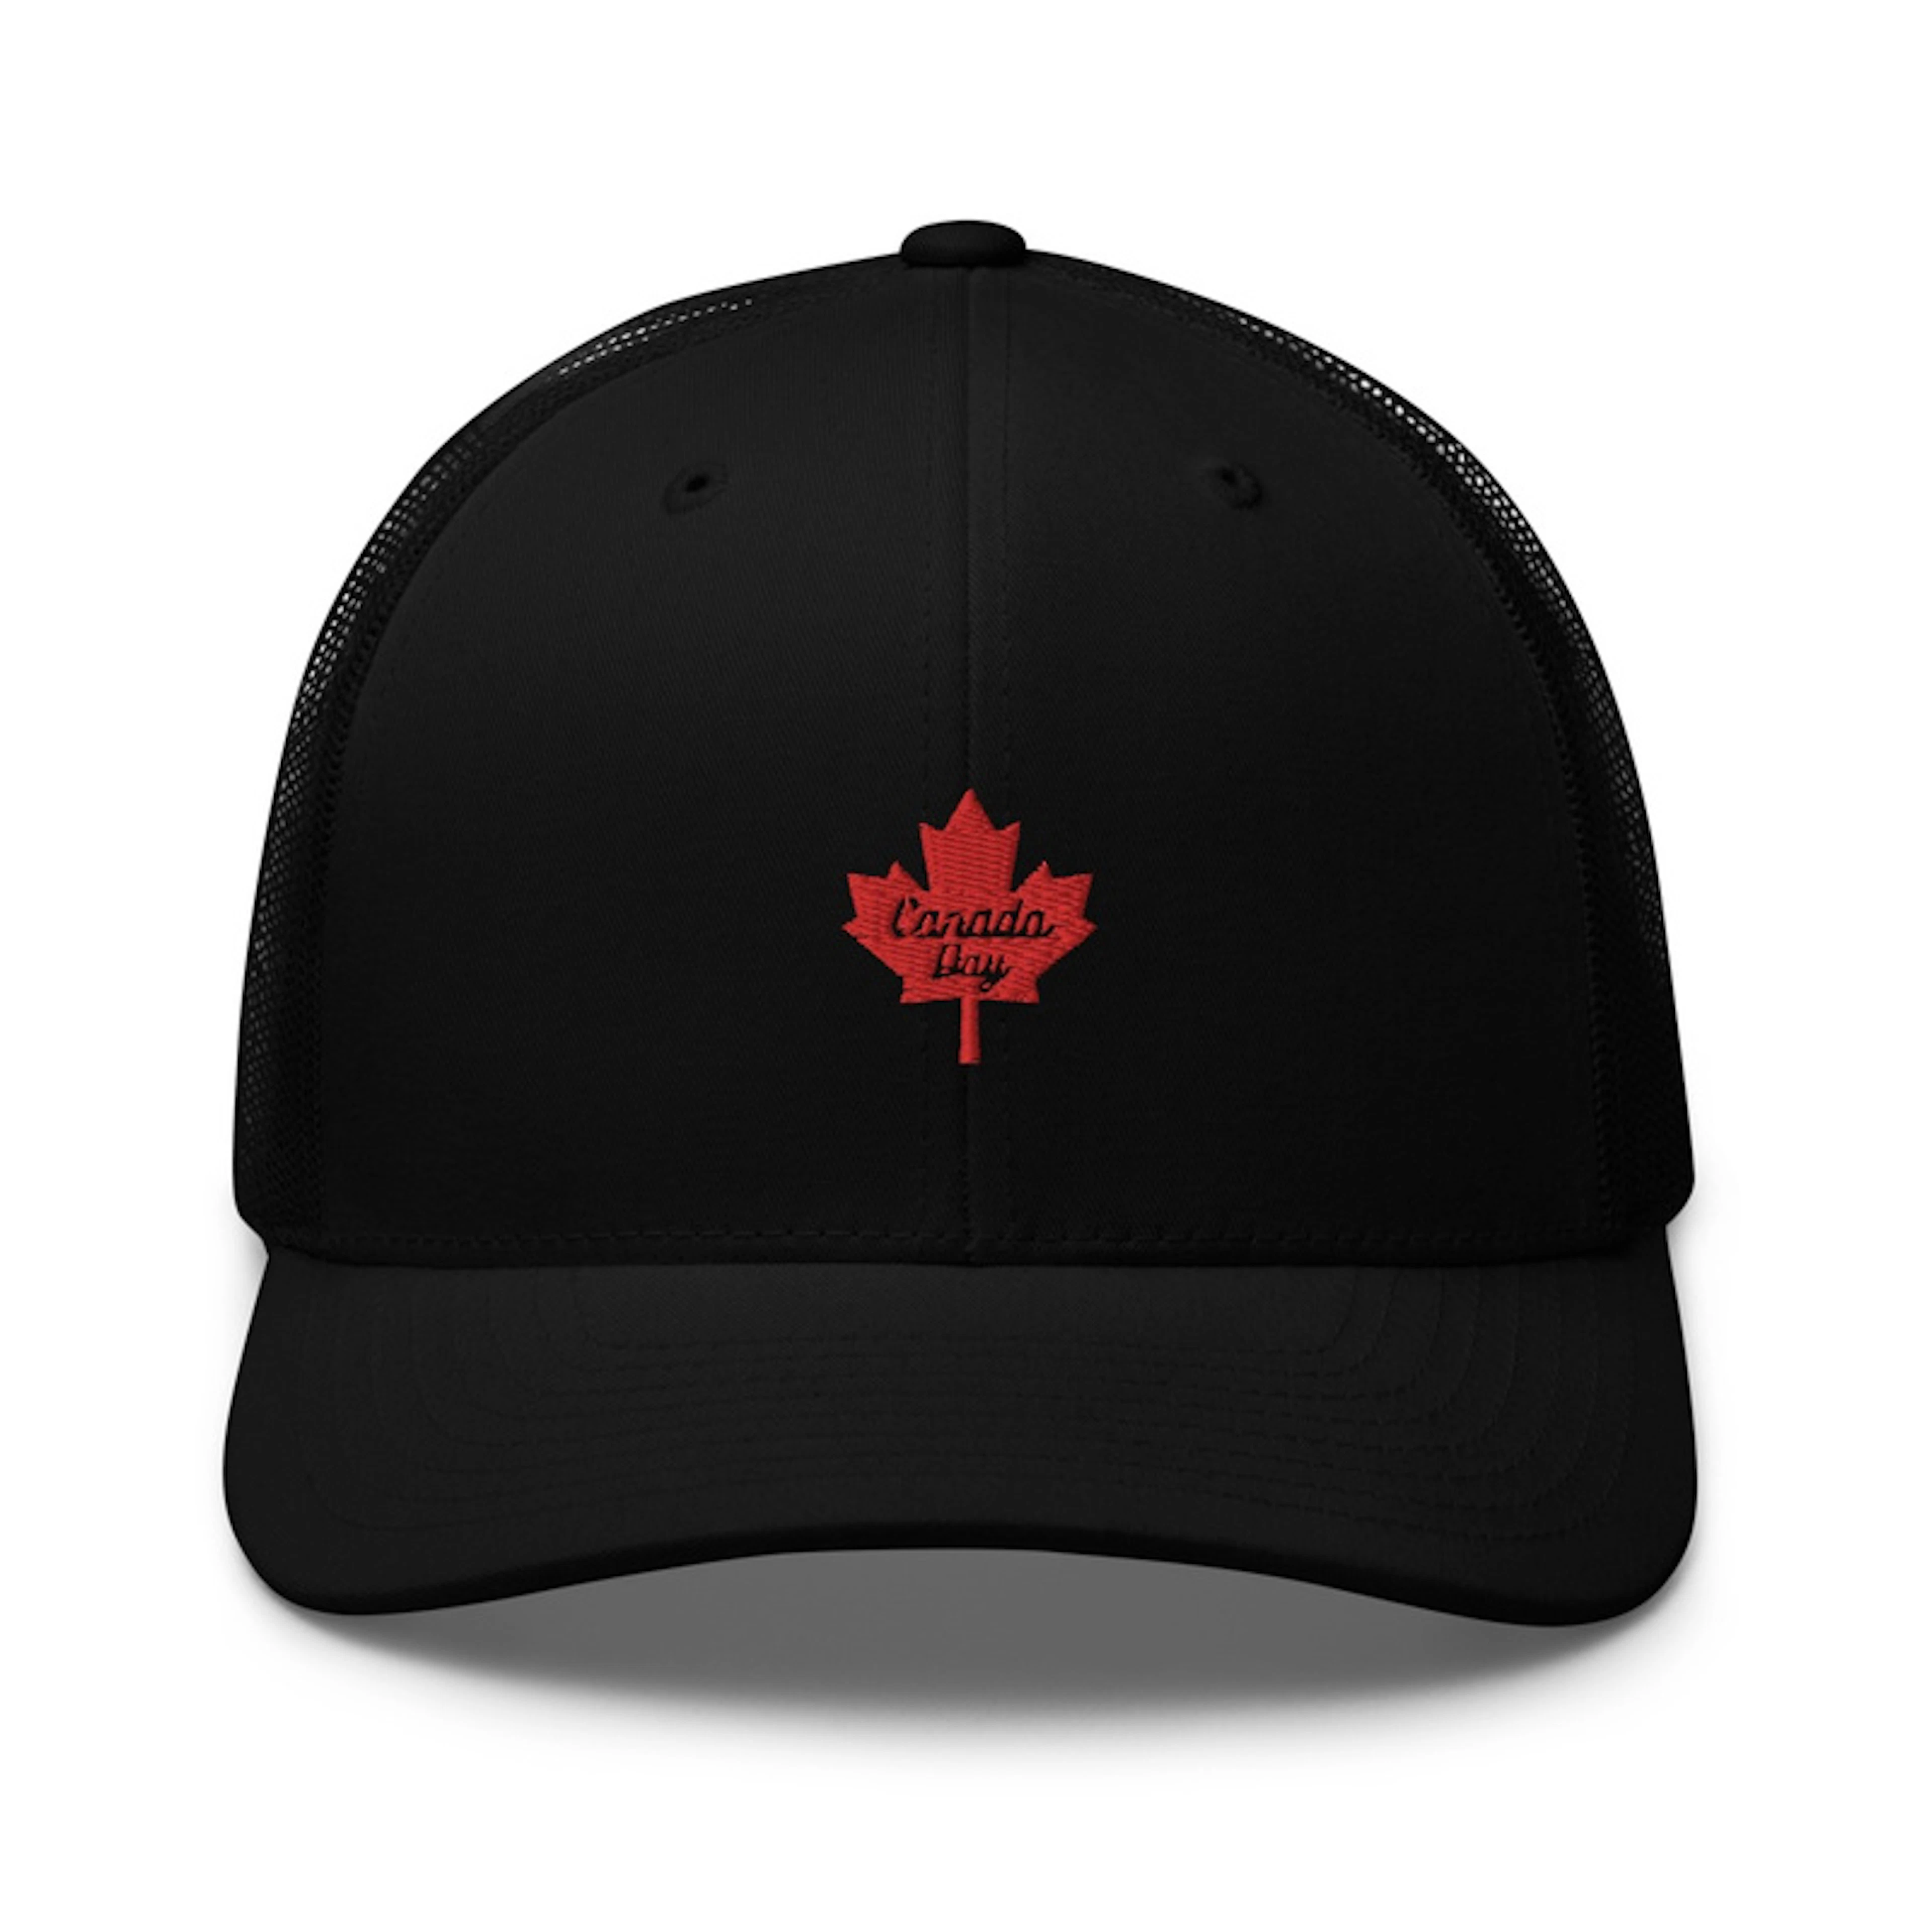 Canada Day trucker hat.